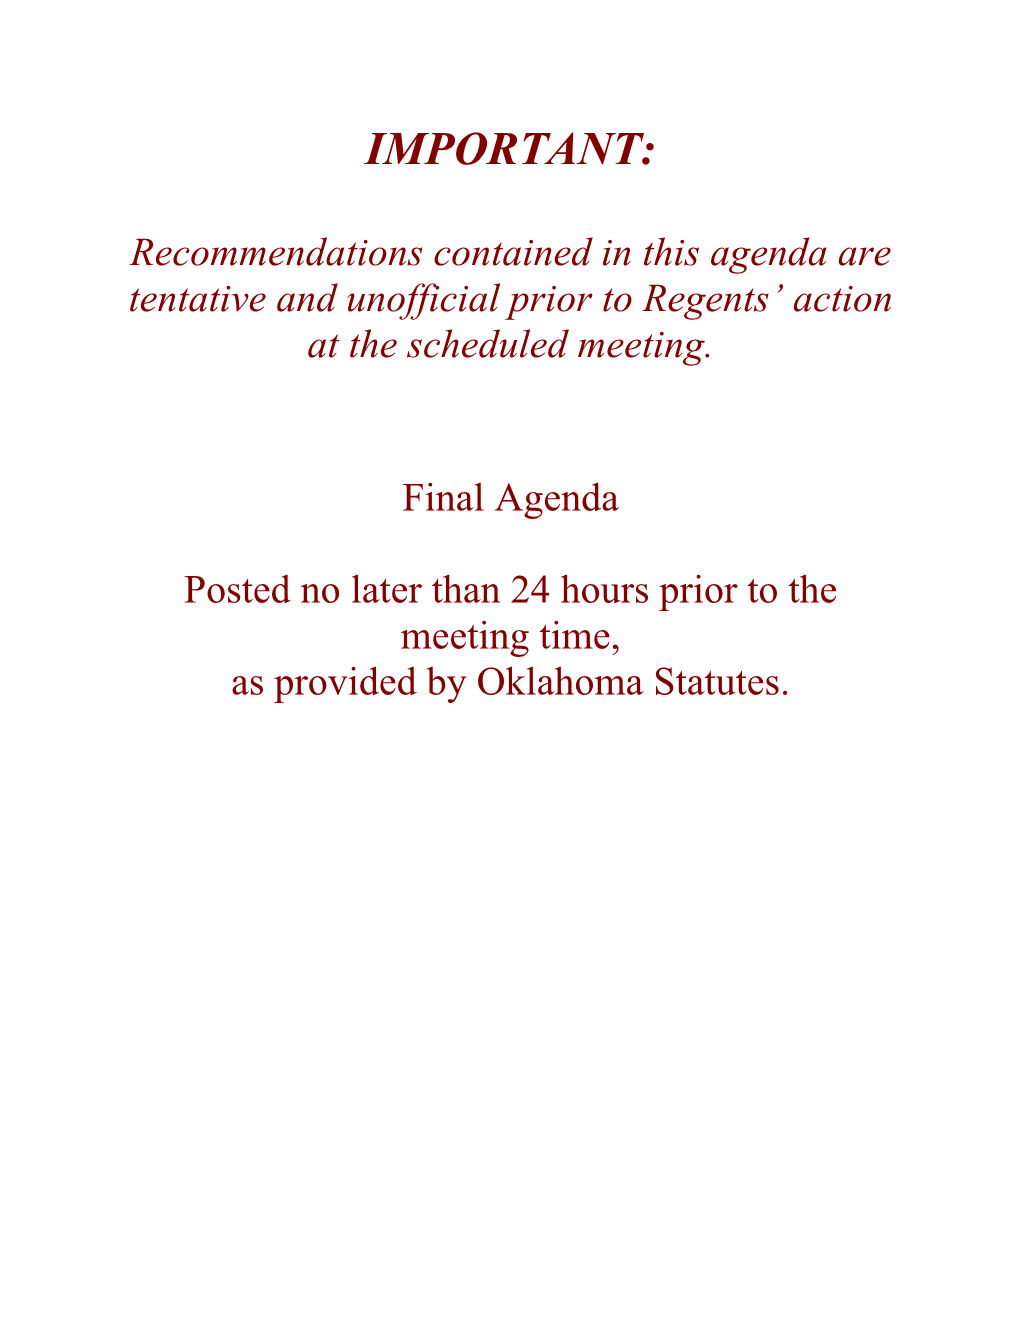 OU Regents Official Agenda